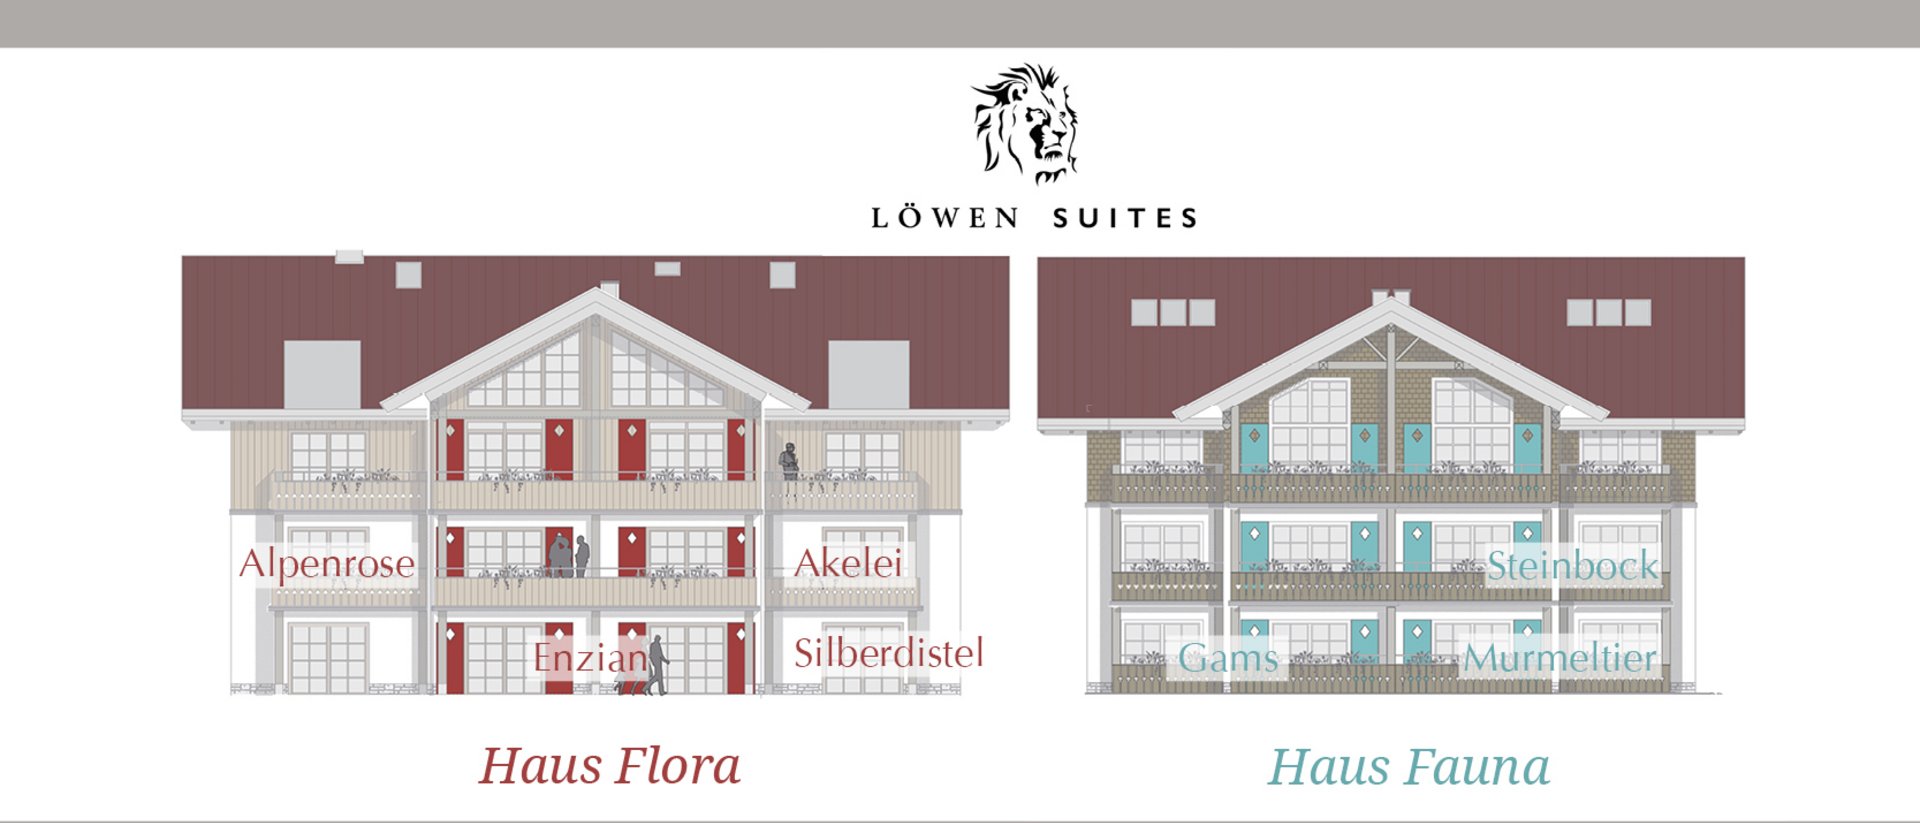 Luxury holiday apartments in the Hotel Bayerischer Hof